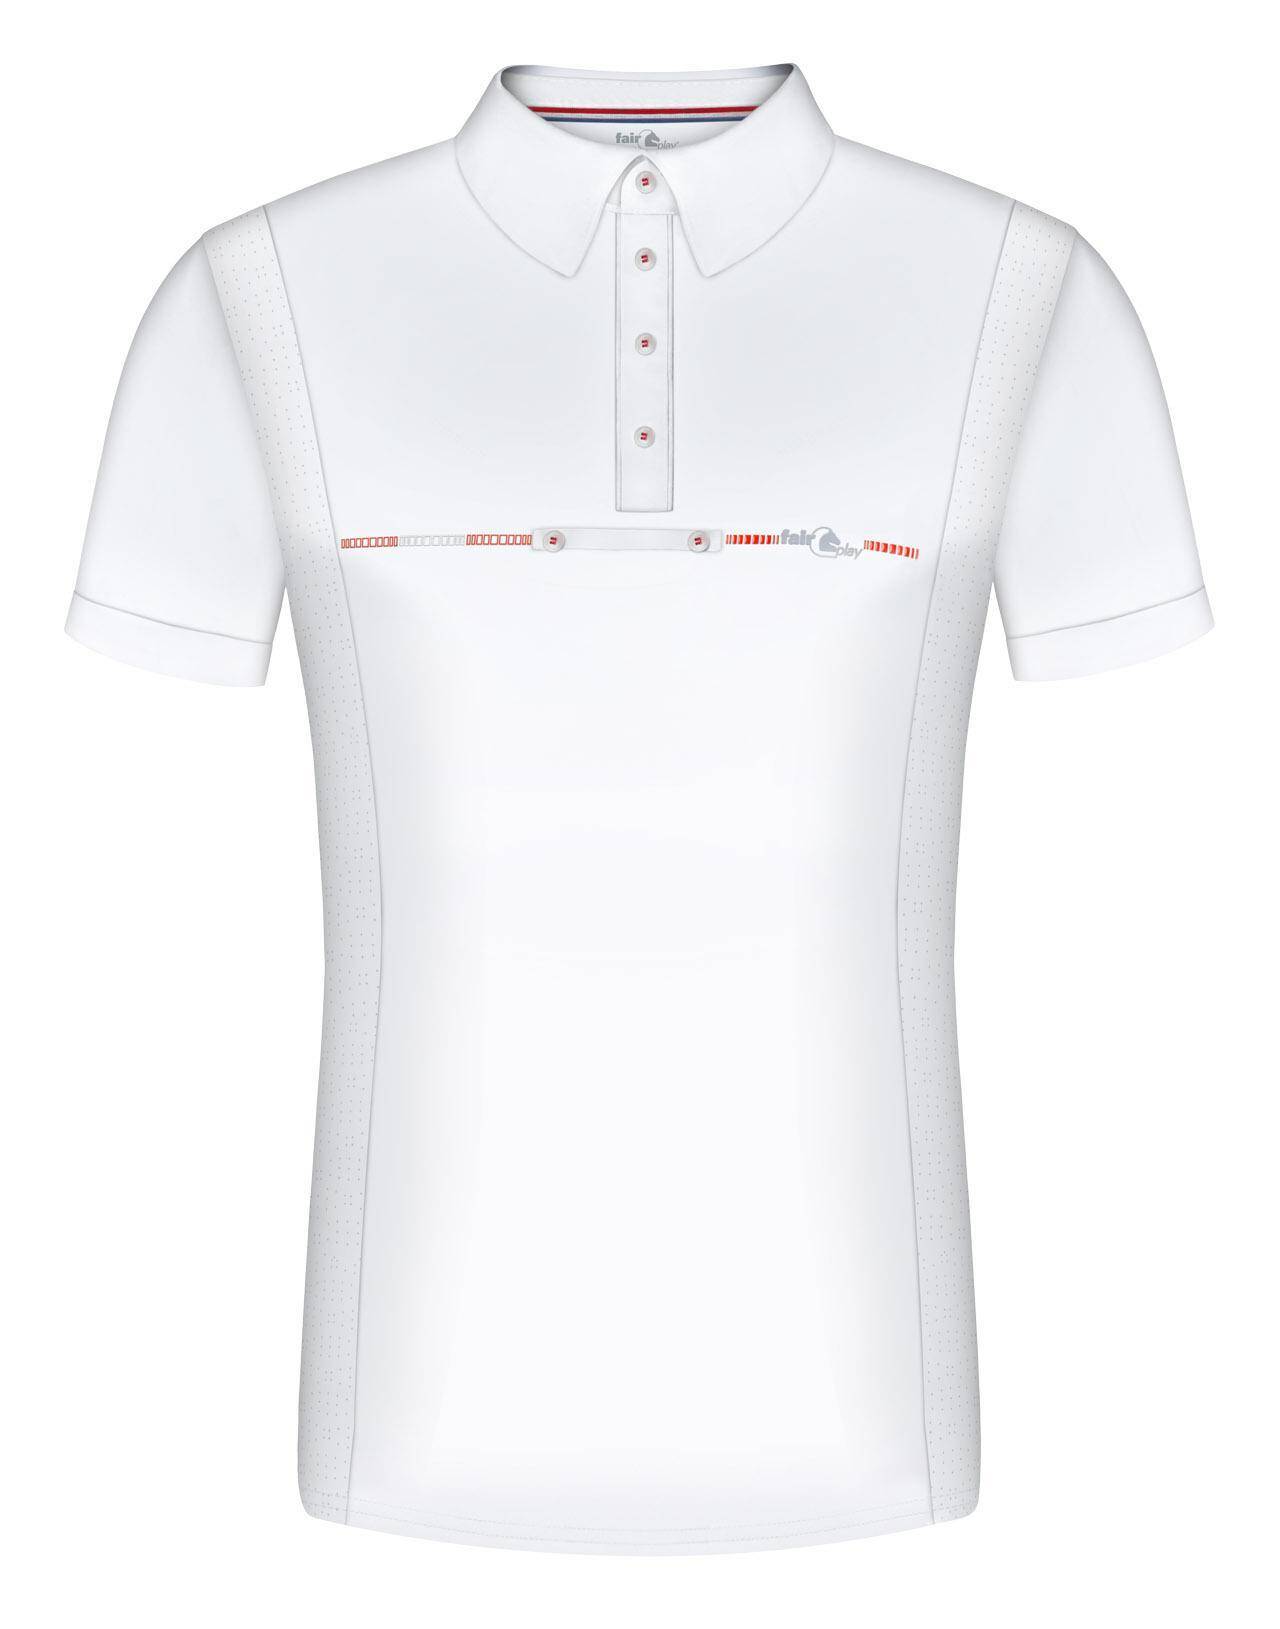 Koszulka konkursowa FP DAVID biały  52